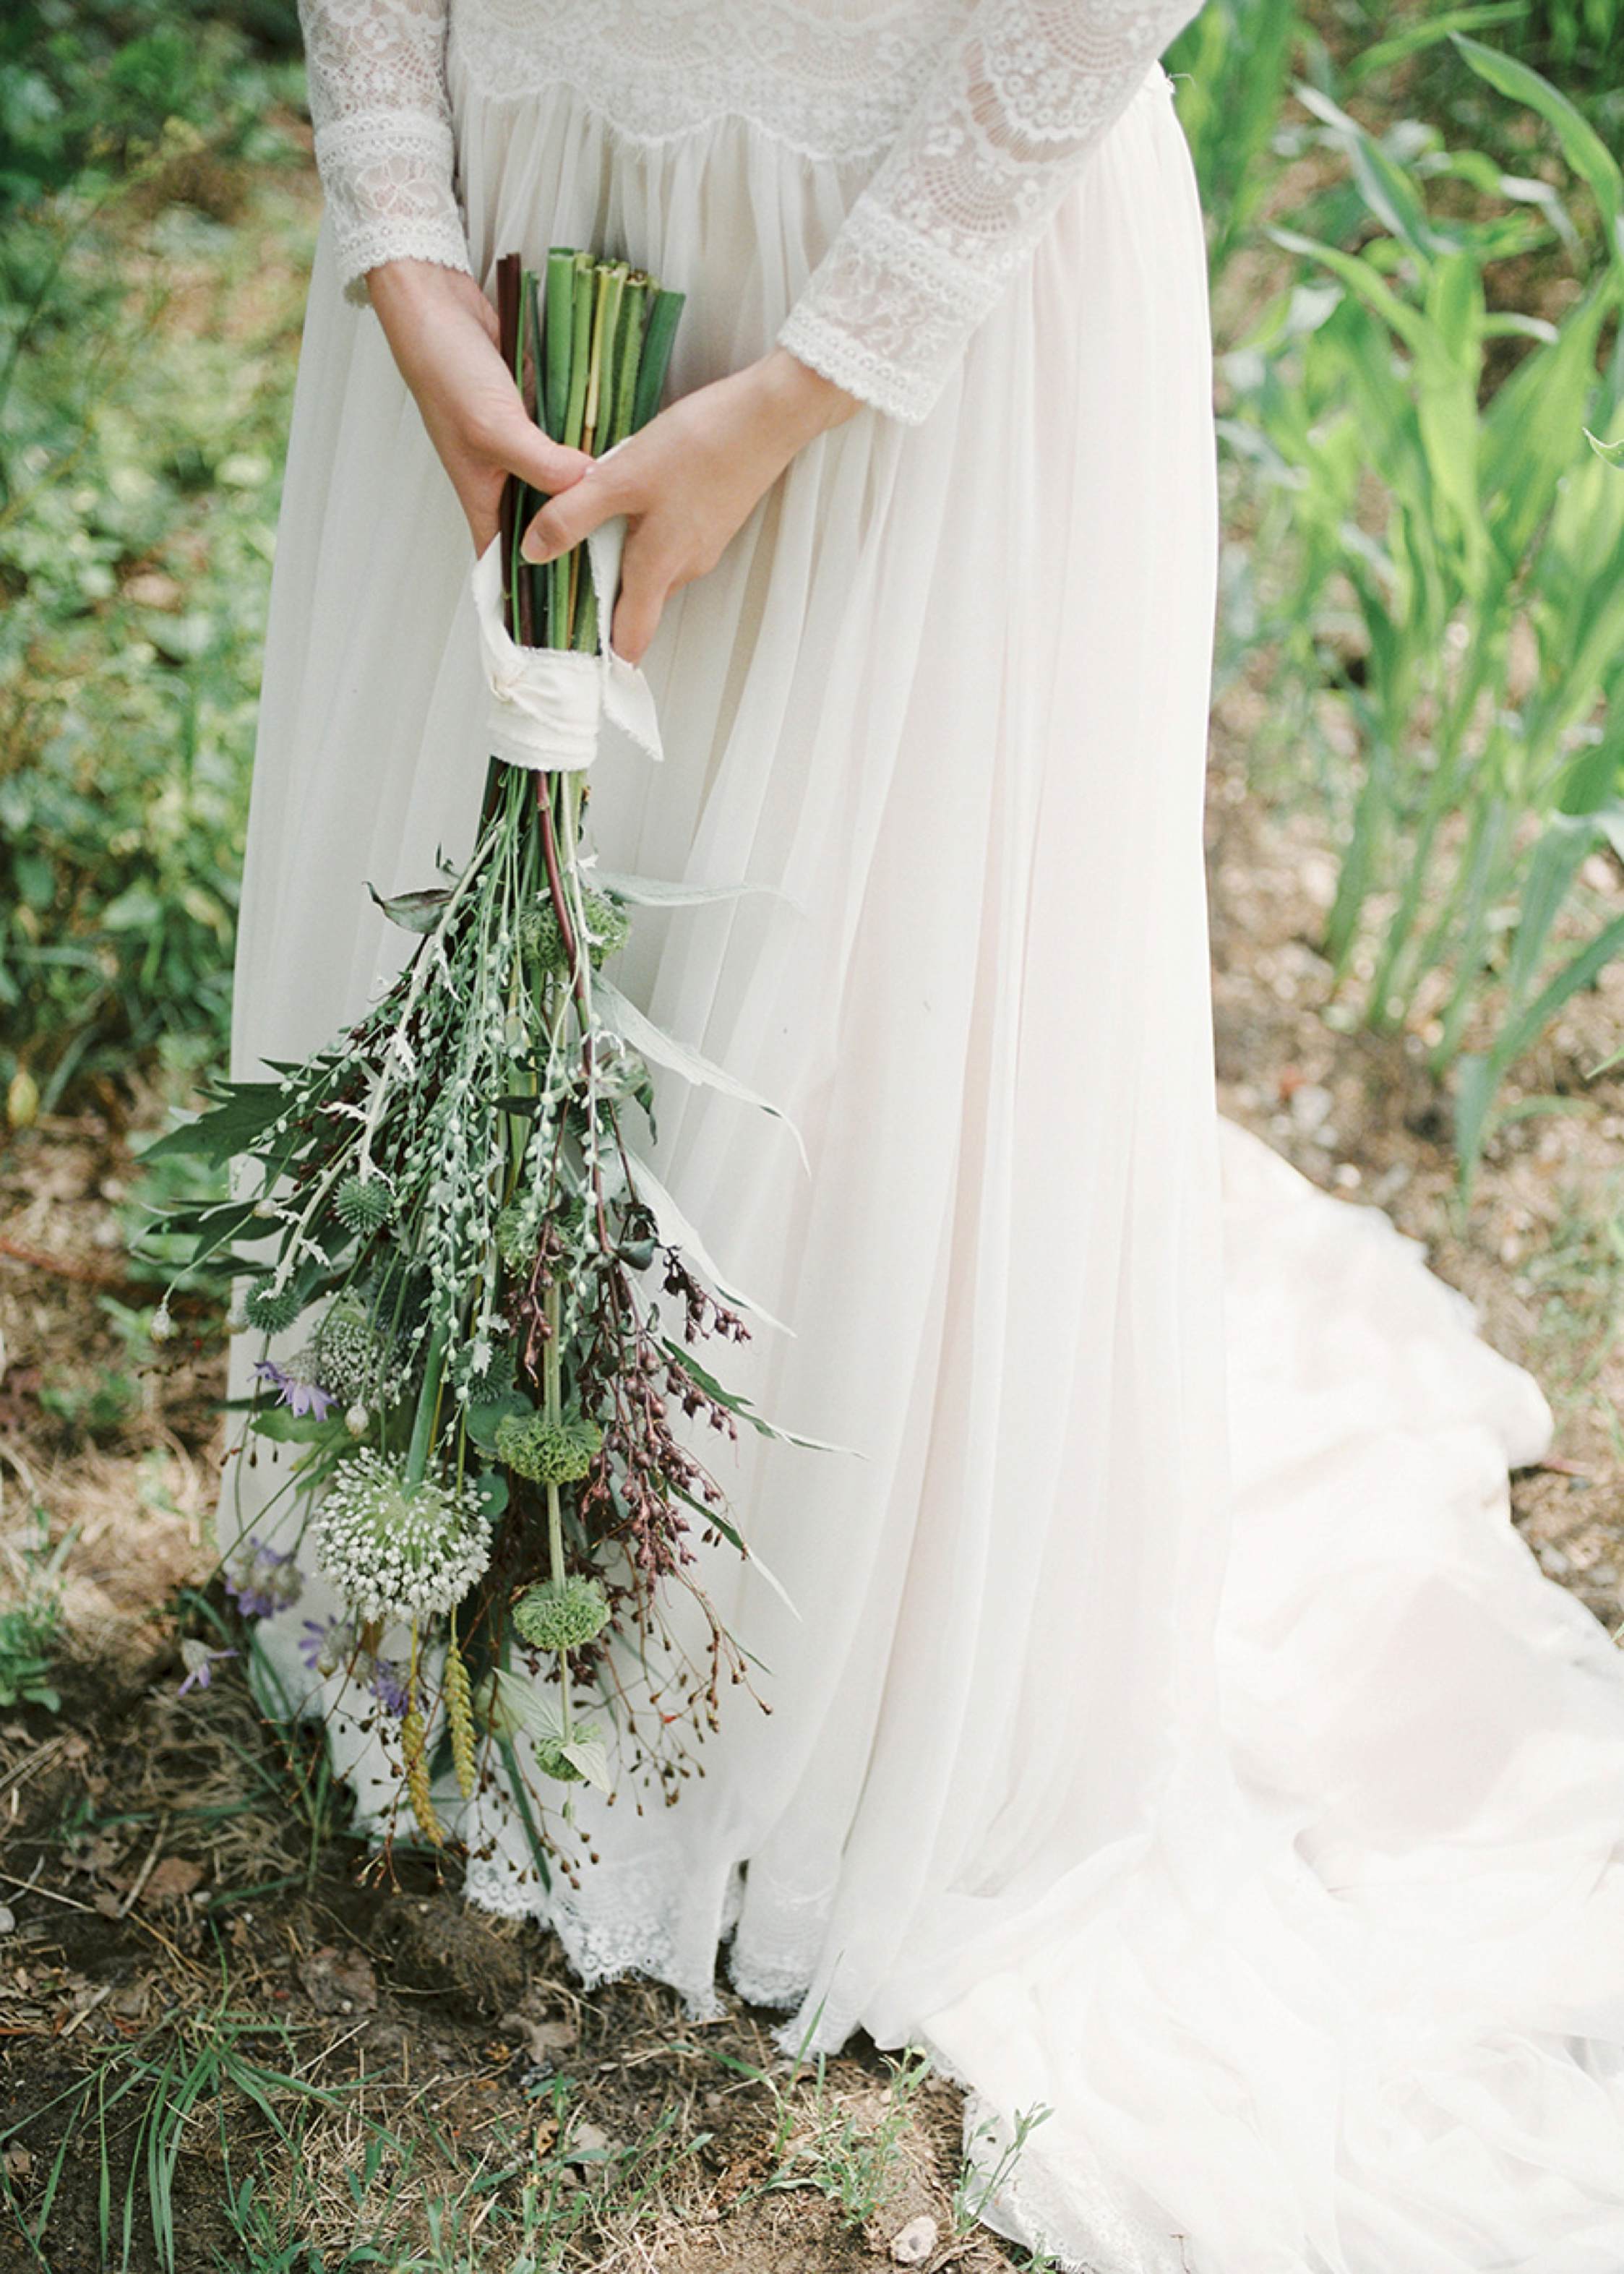 Wedding photographer the Netherlands - Bridal bouquet